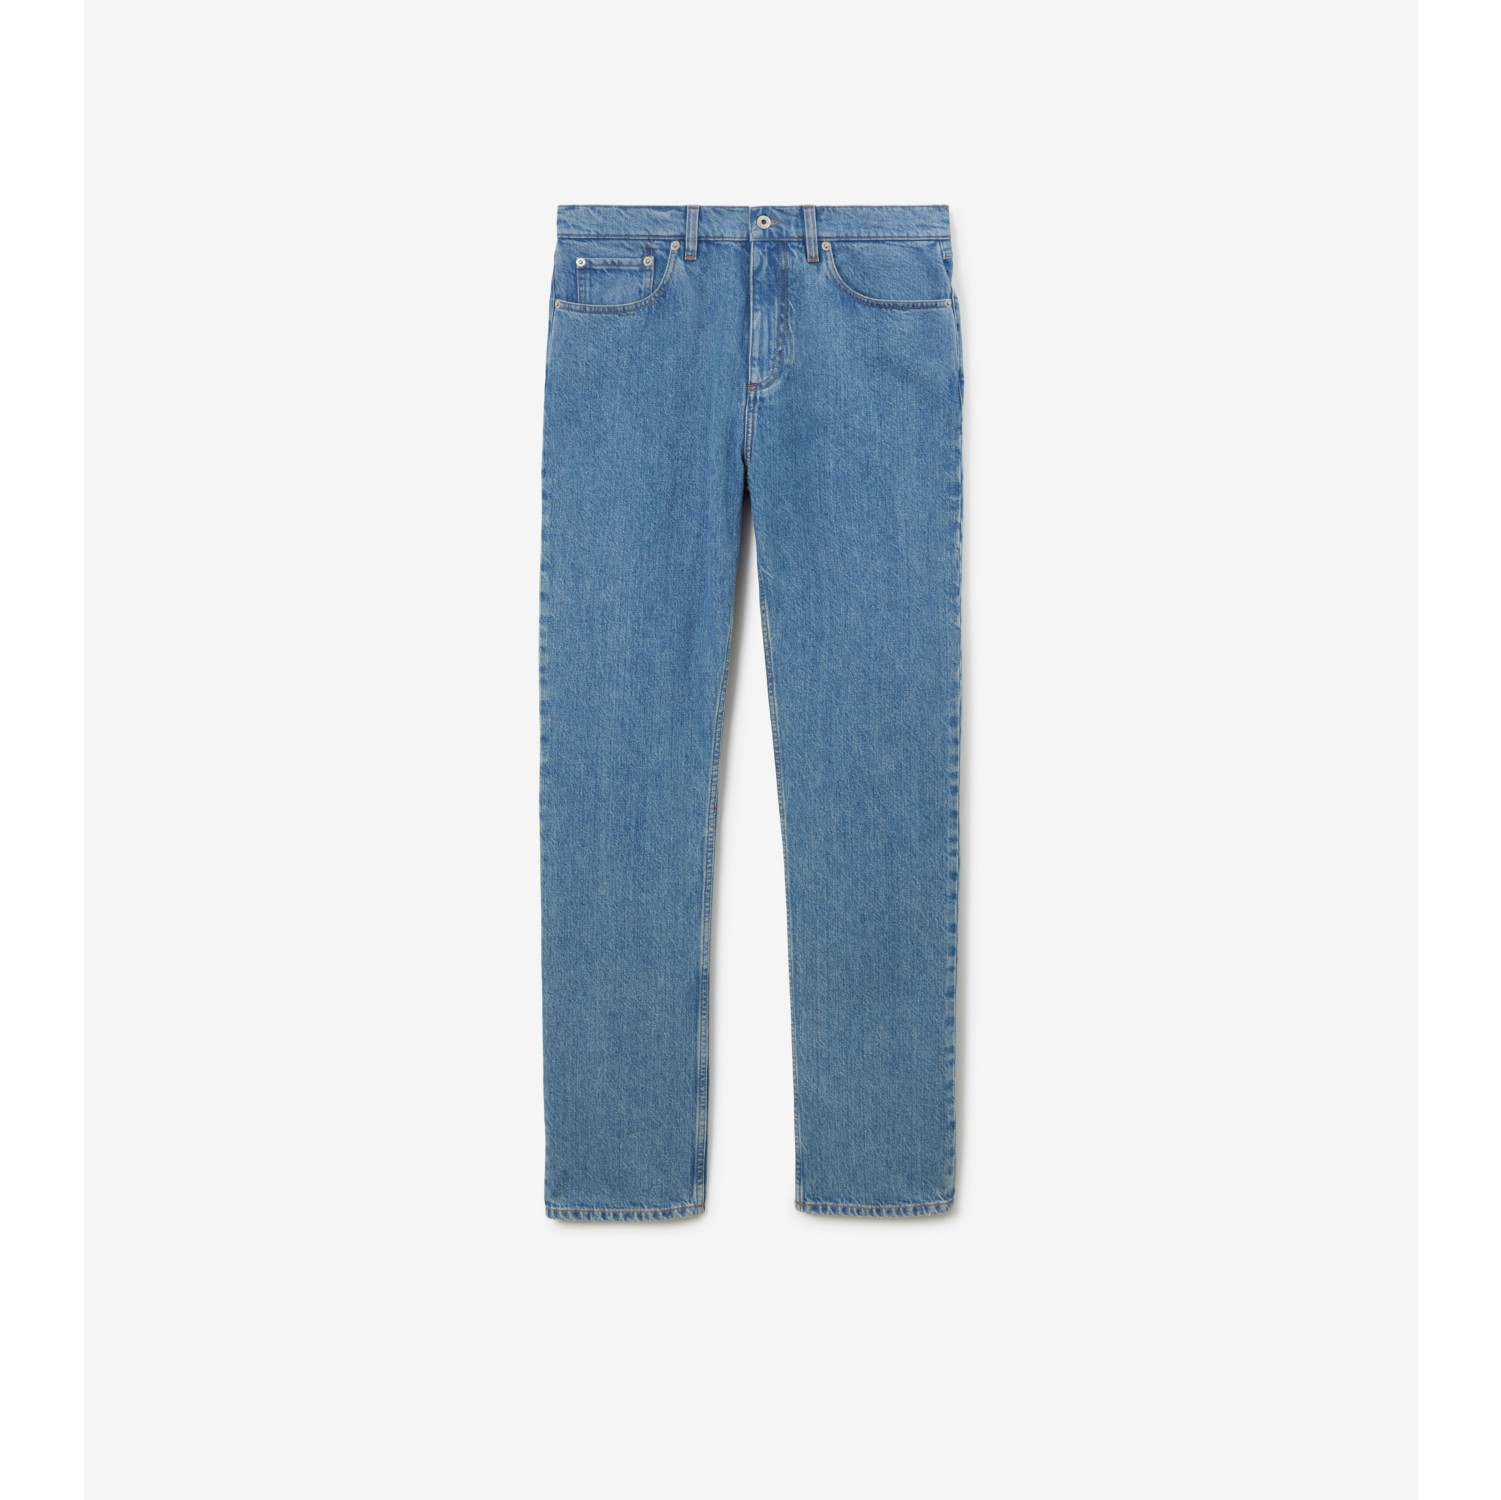 mens jeans price